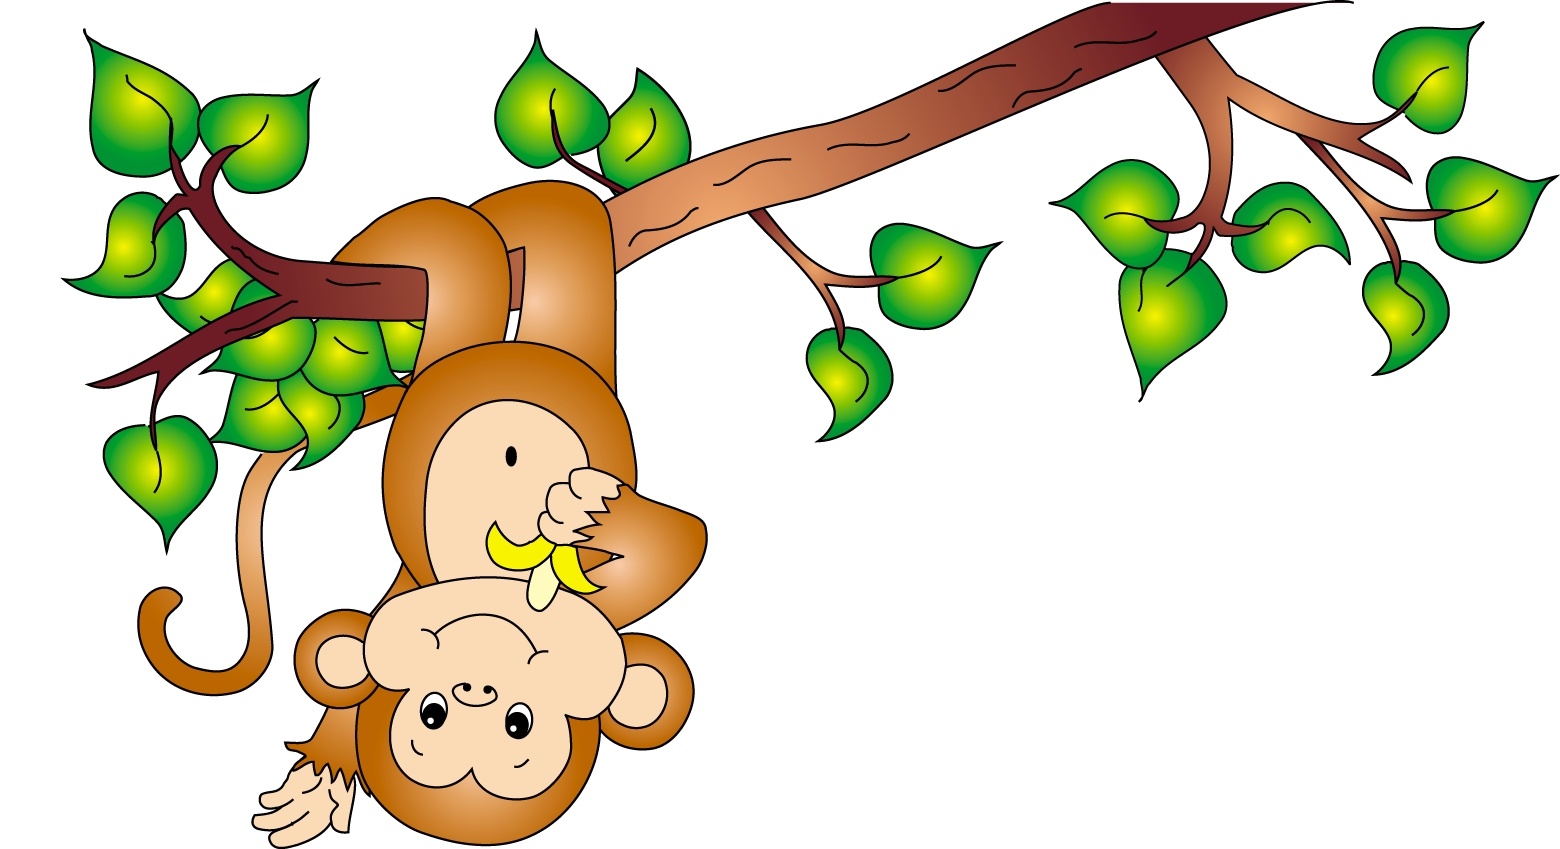 Cute Cartoon Monkey - ClipArt Best